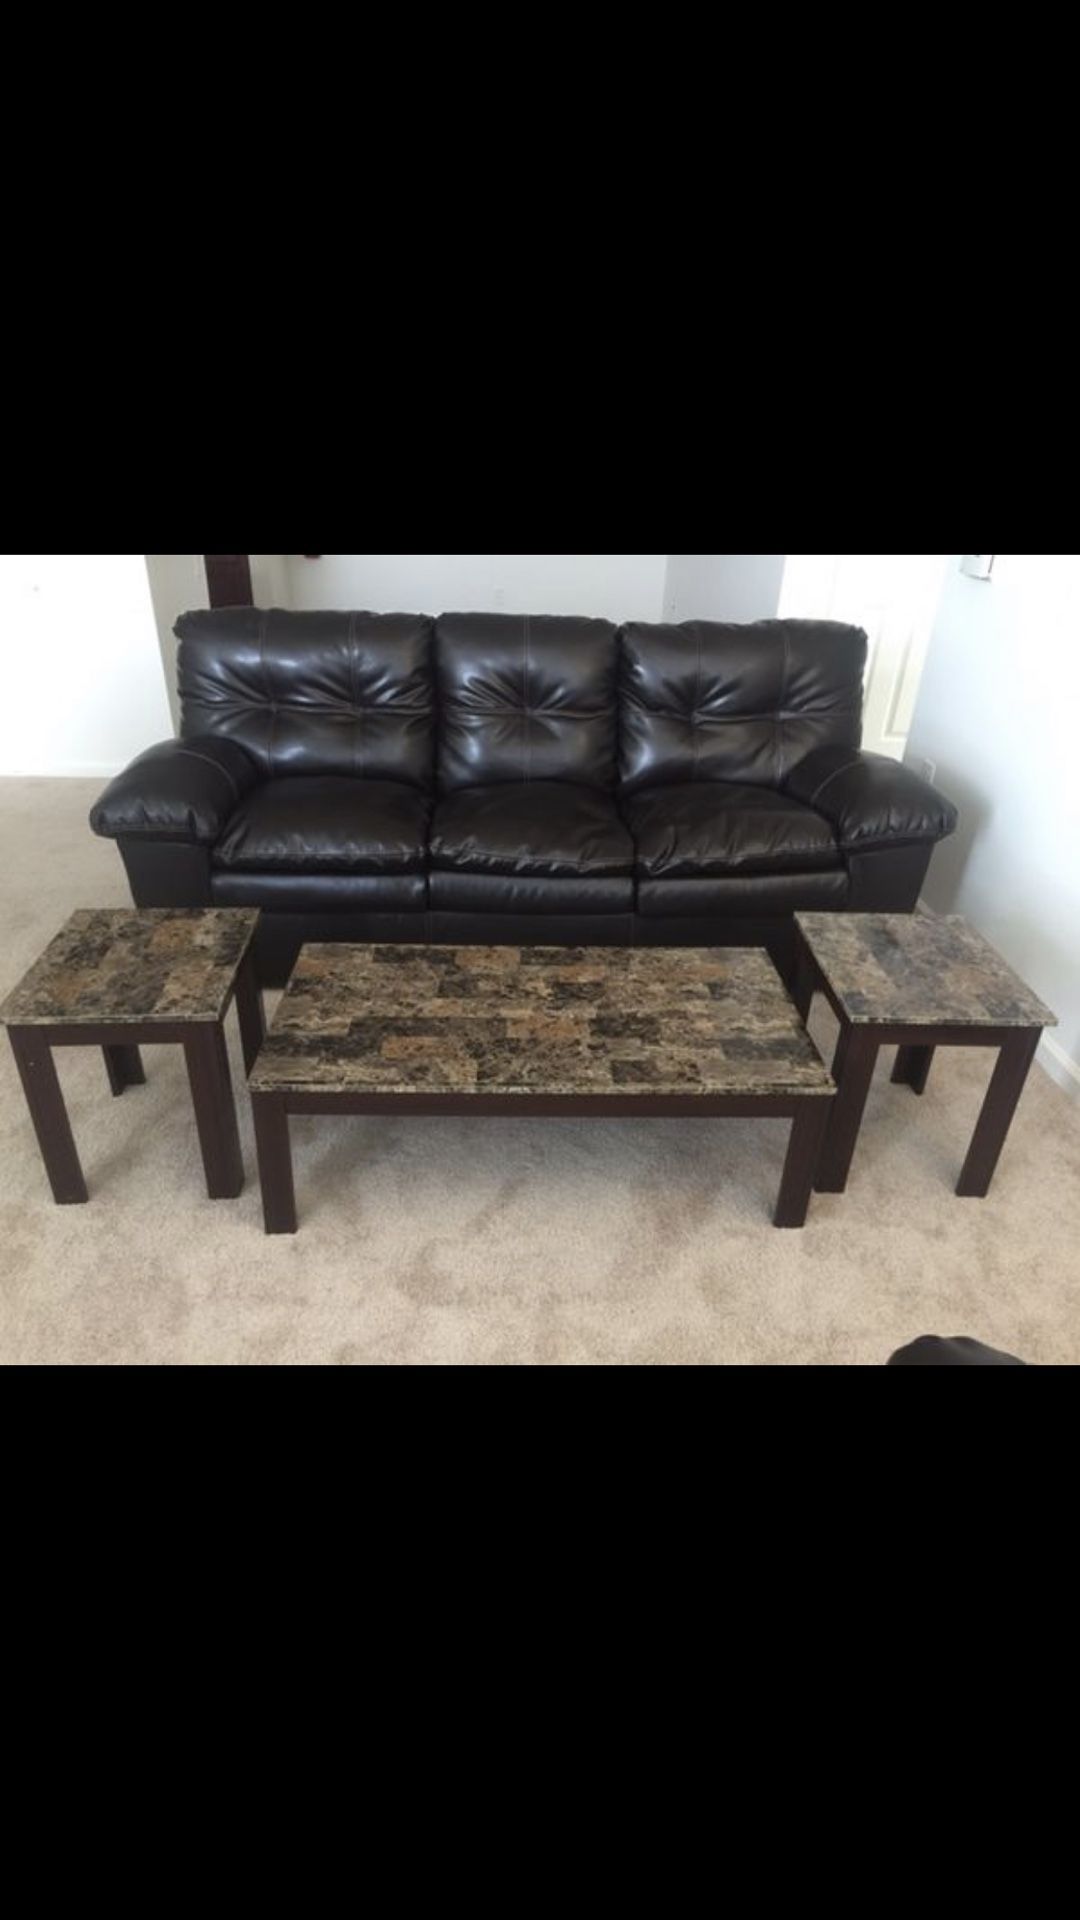 Leather Living Room Furniture-Full Set (like new)